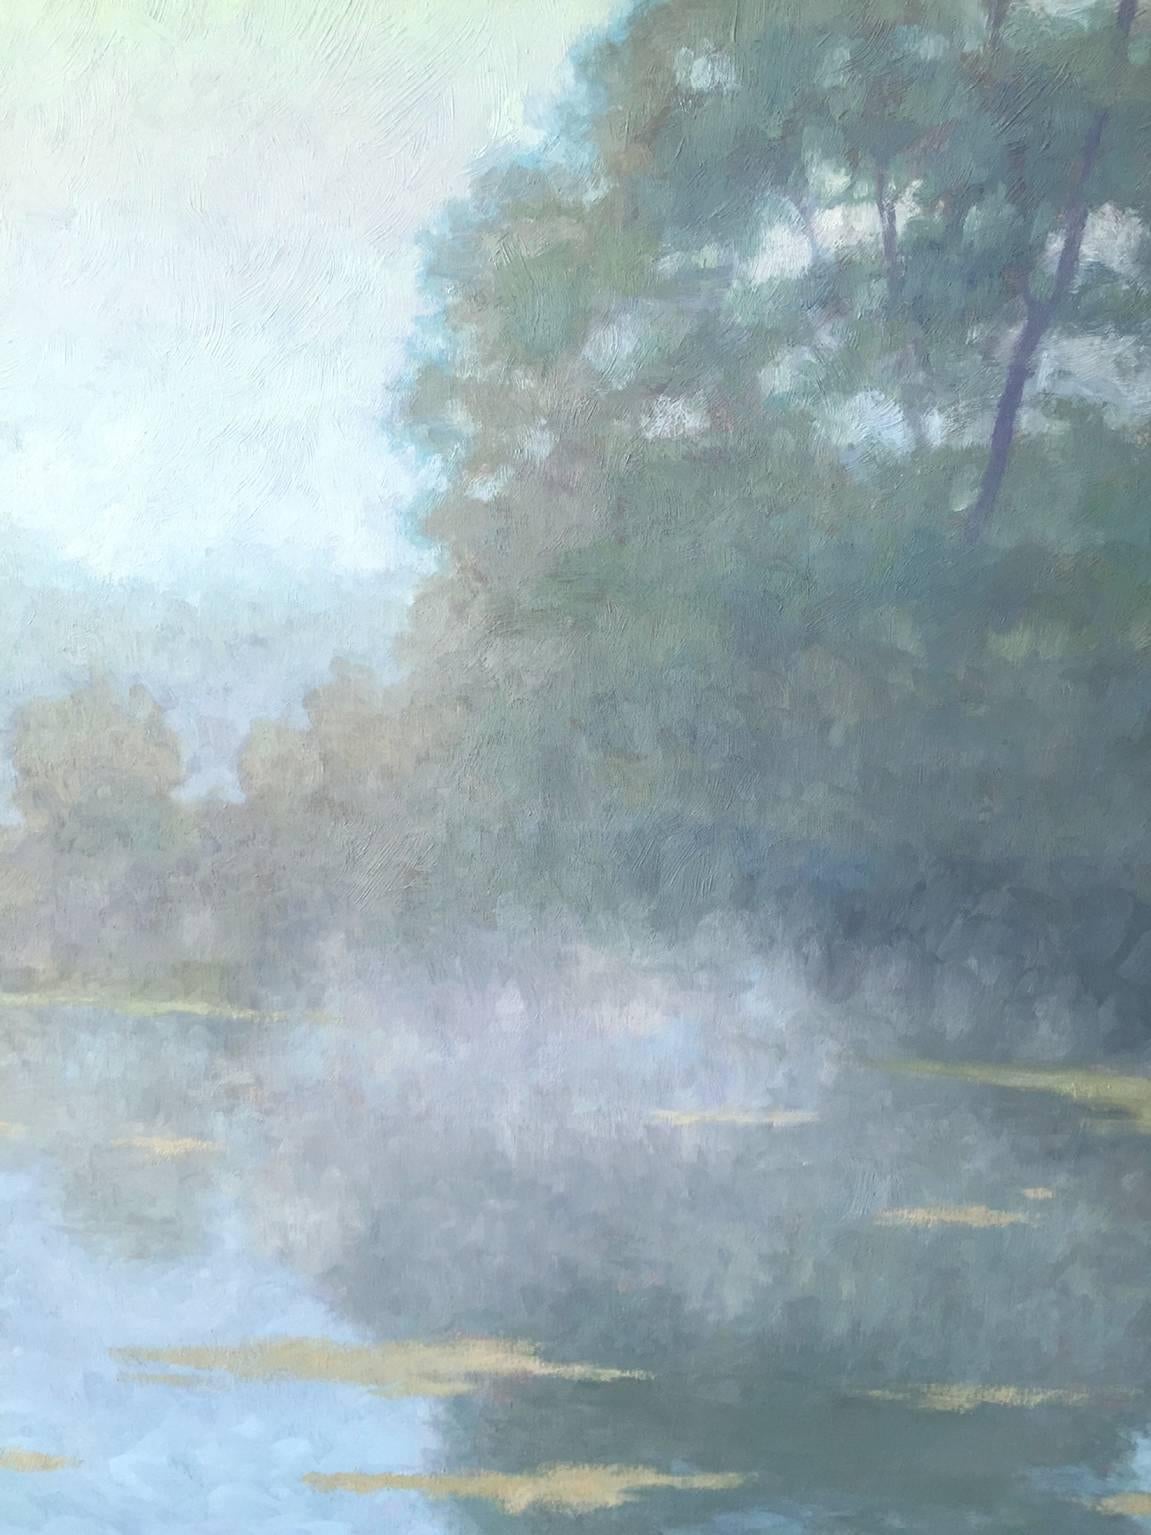 Morning fog - Painting by Robert Longley